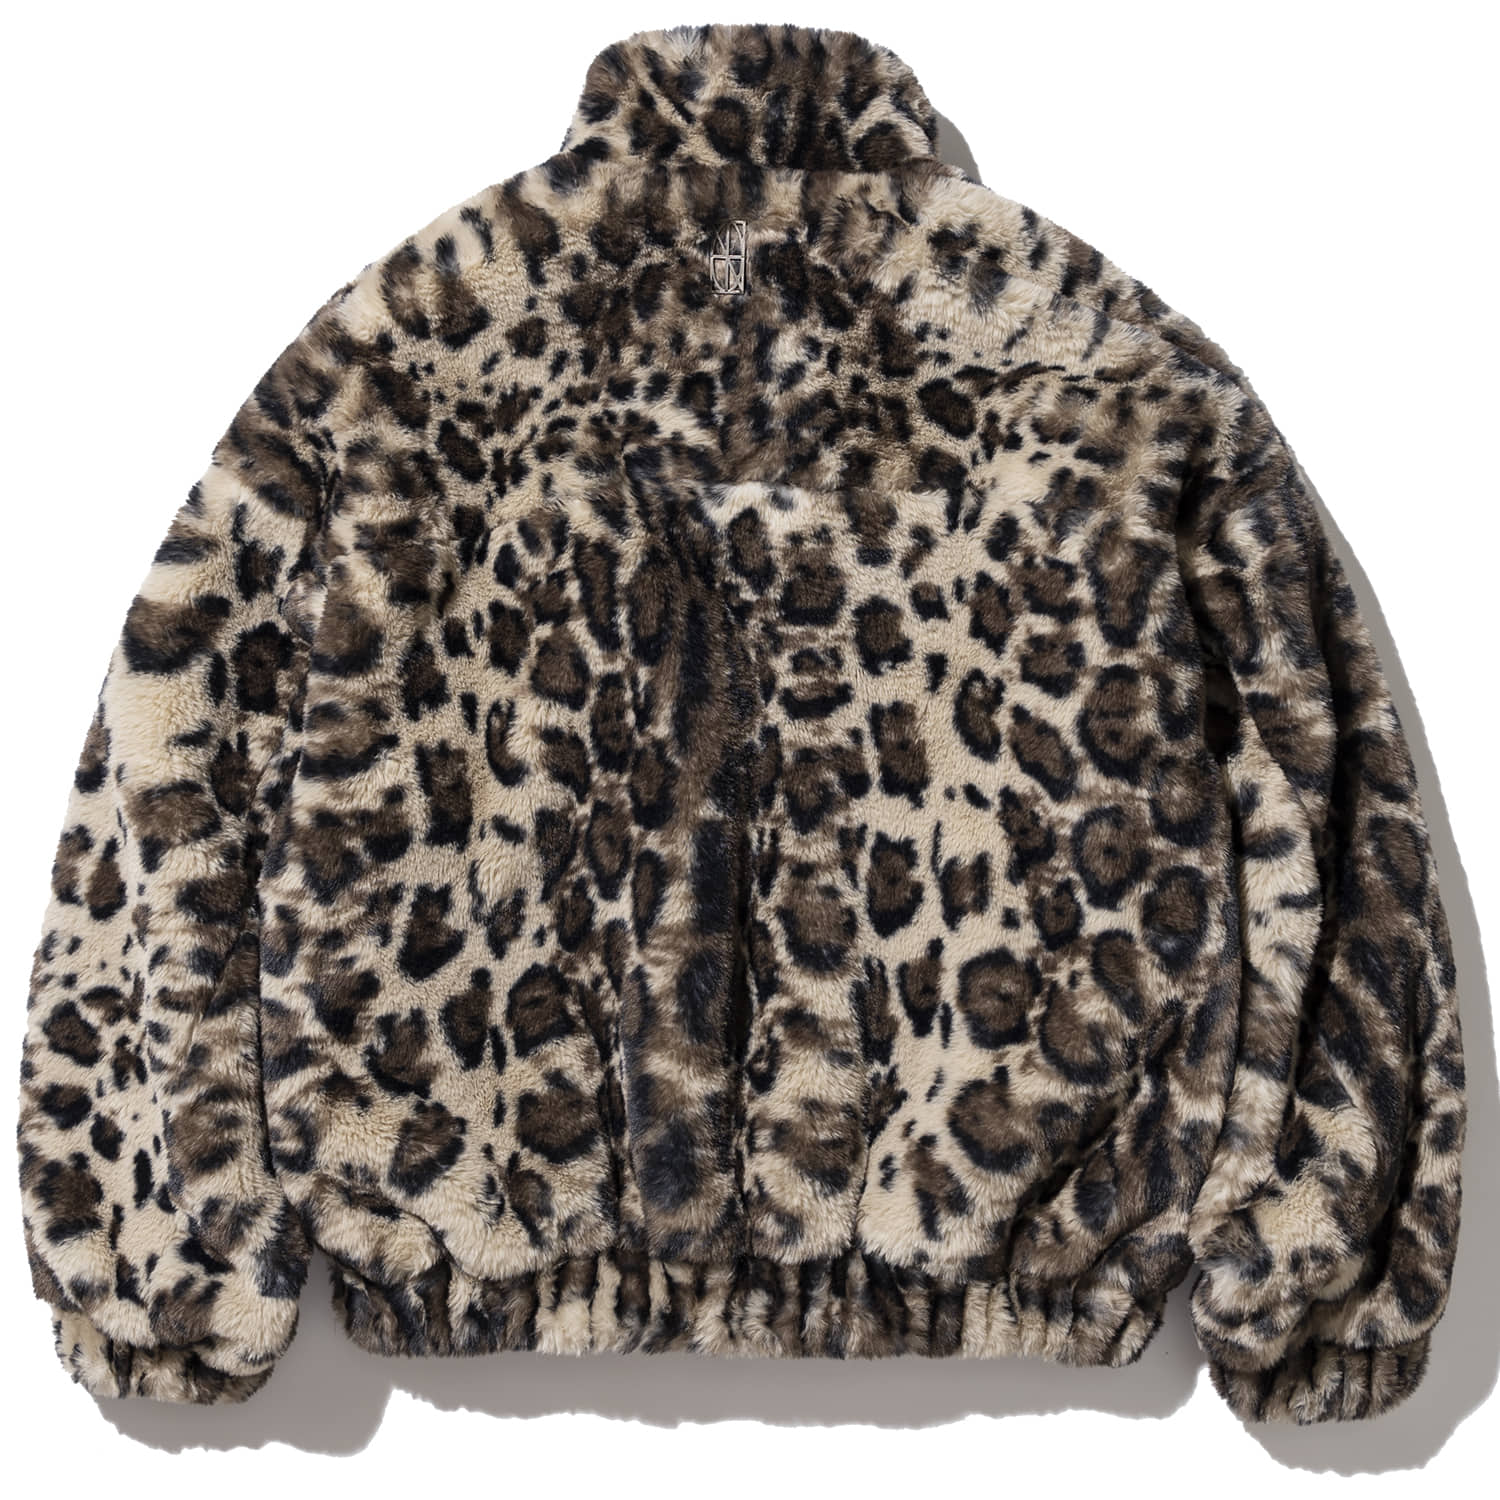 Symbol Fur Jacket Leopard,NOT4NERD